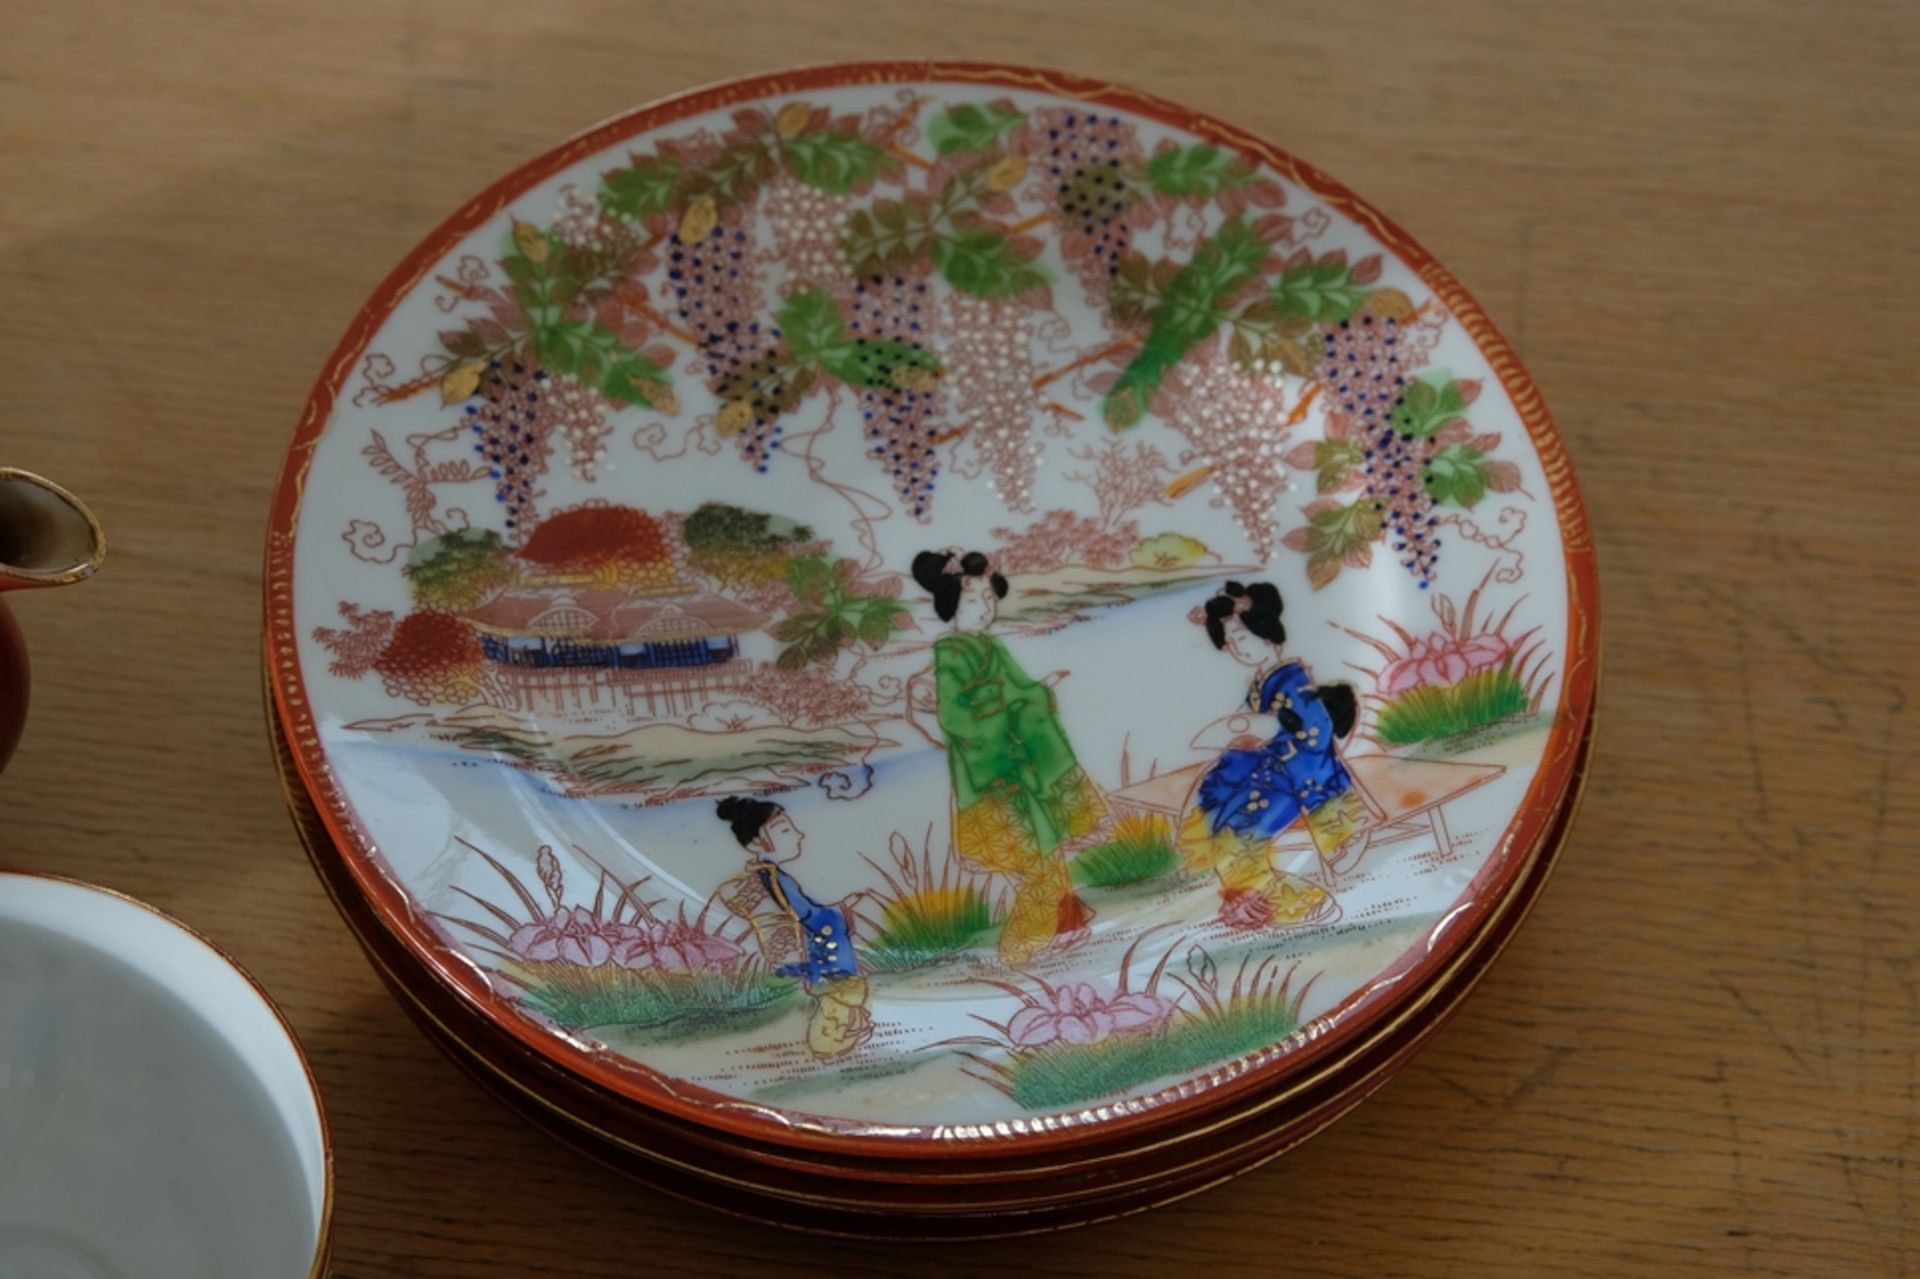 Tea service, Japanese, lid of sugar bowl missing - Image 3 of 6